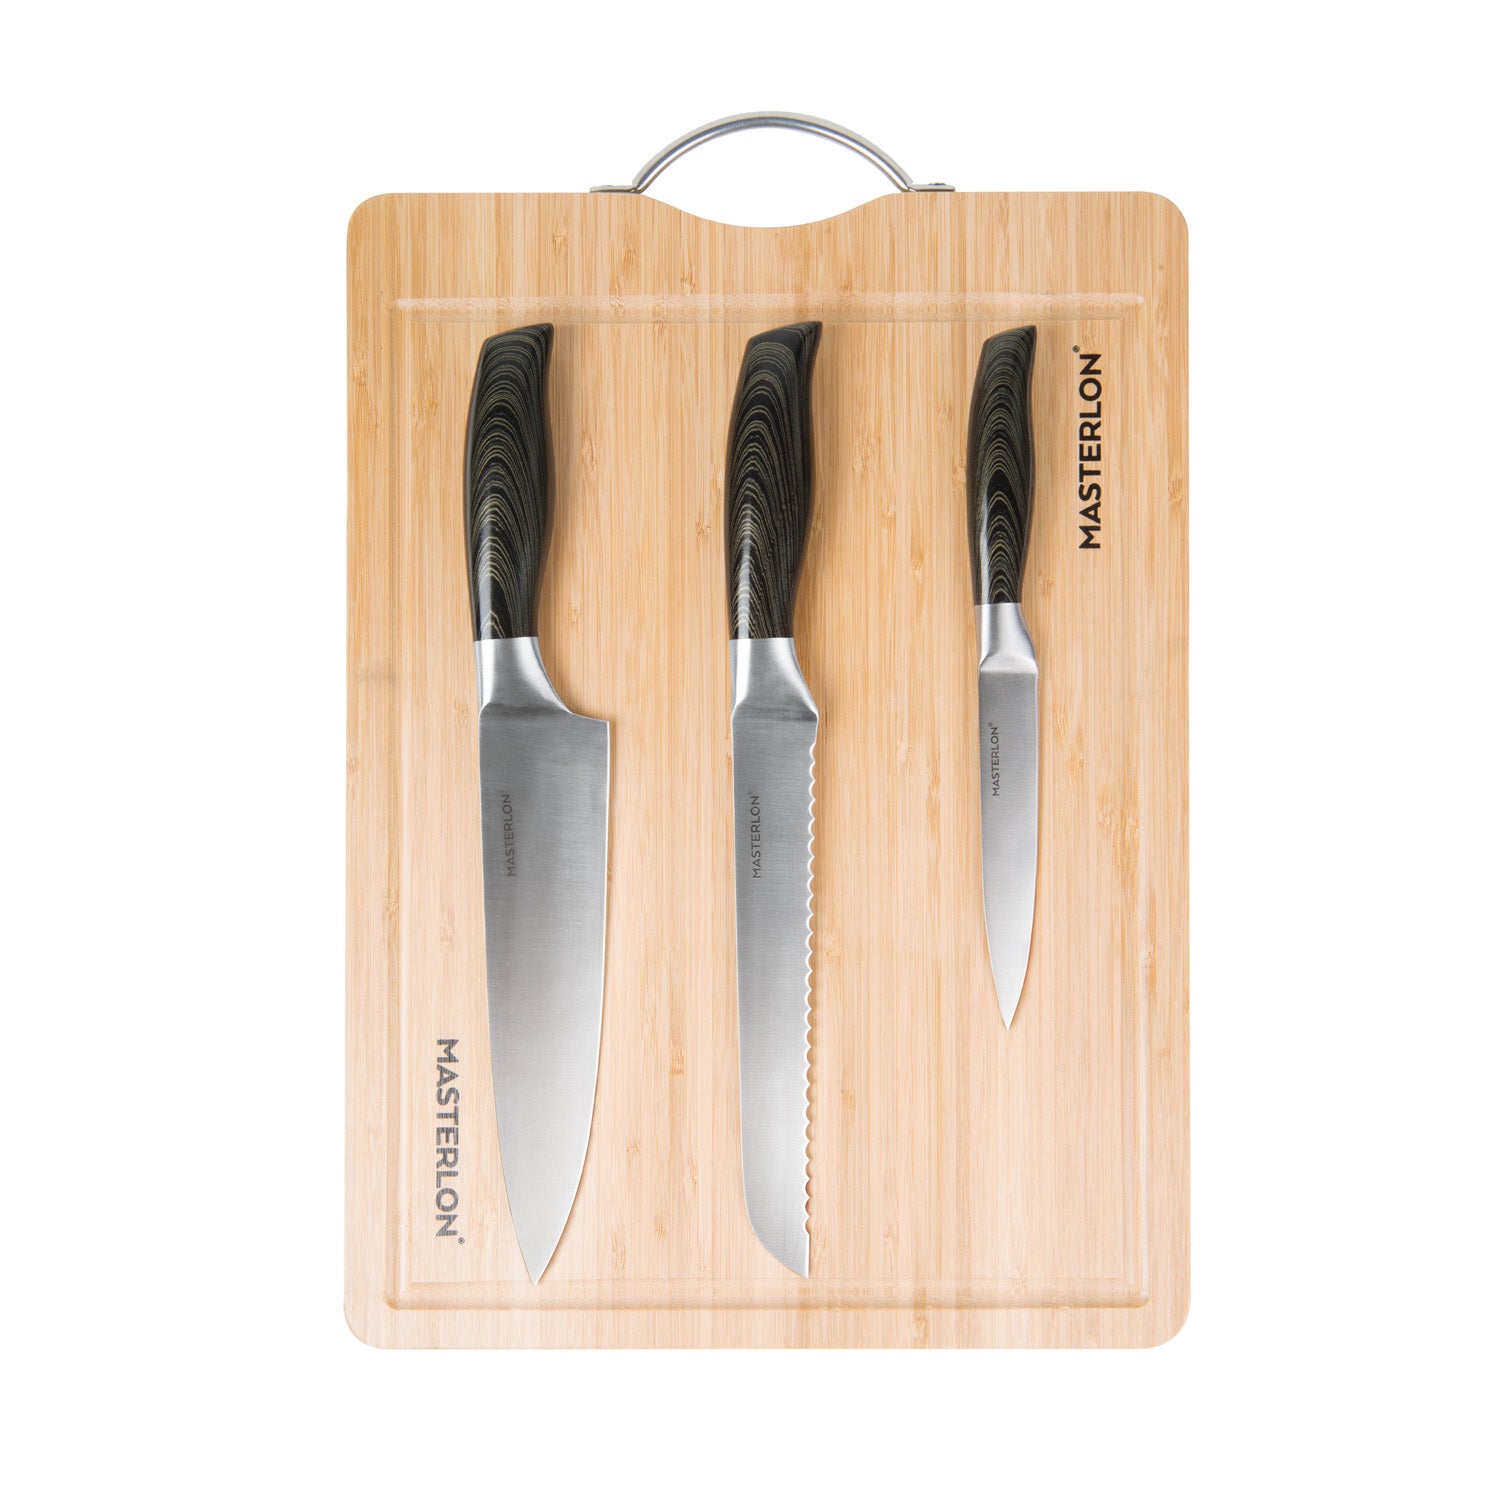 Masterlon 3-Pc Knife Set with Bamboo Cutting Board 8